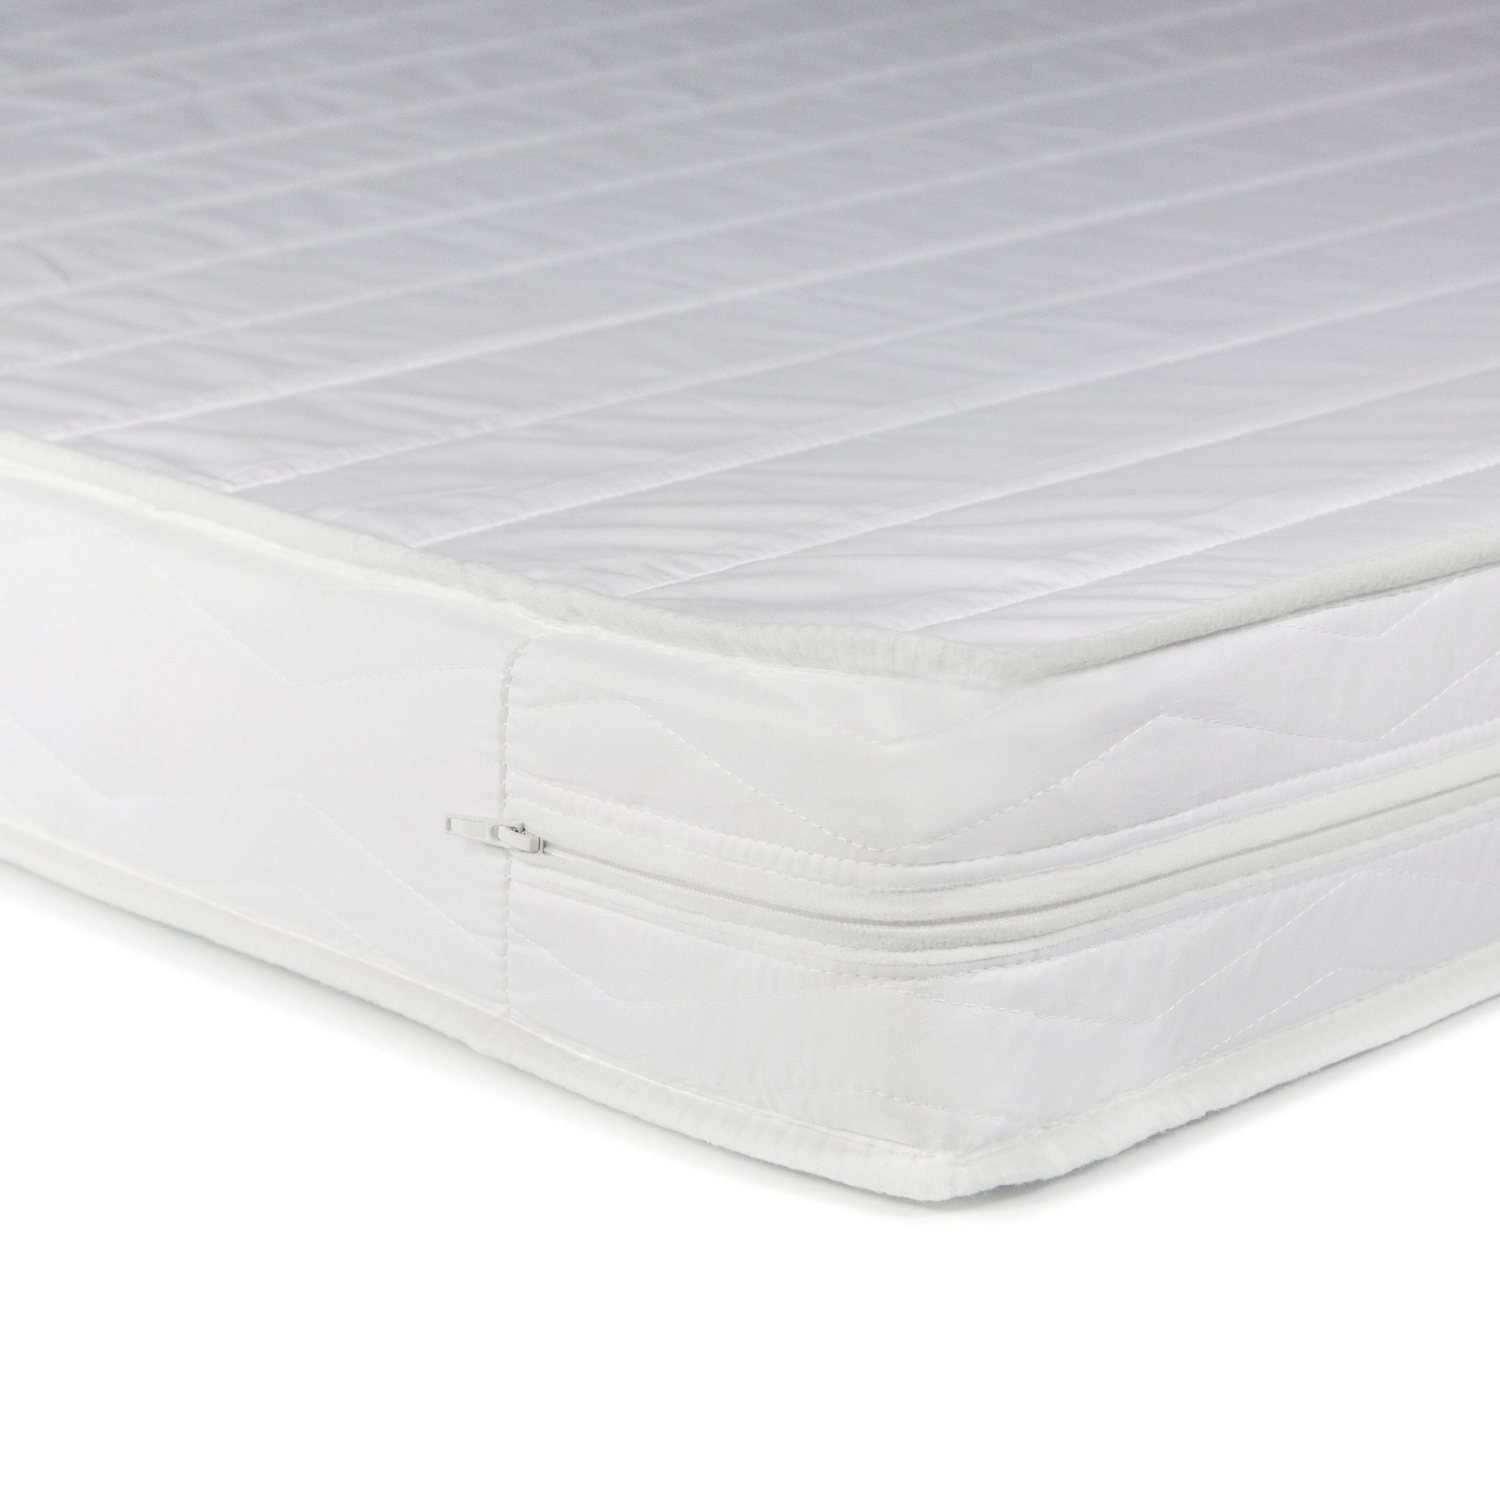 Solid Metal Bed with Mattress 90x200 cm Slatts Single Bed Black Futon Bed Platform Bed Frame Guest Bed 